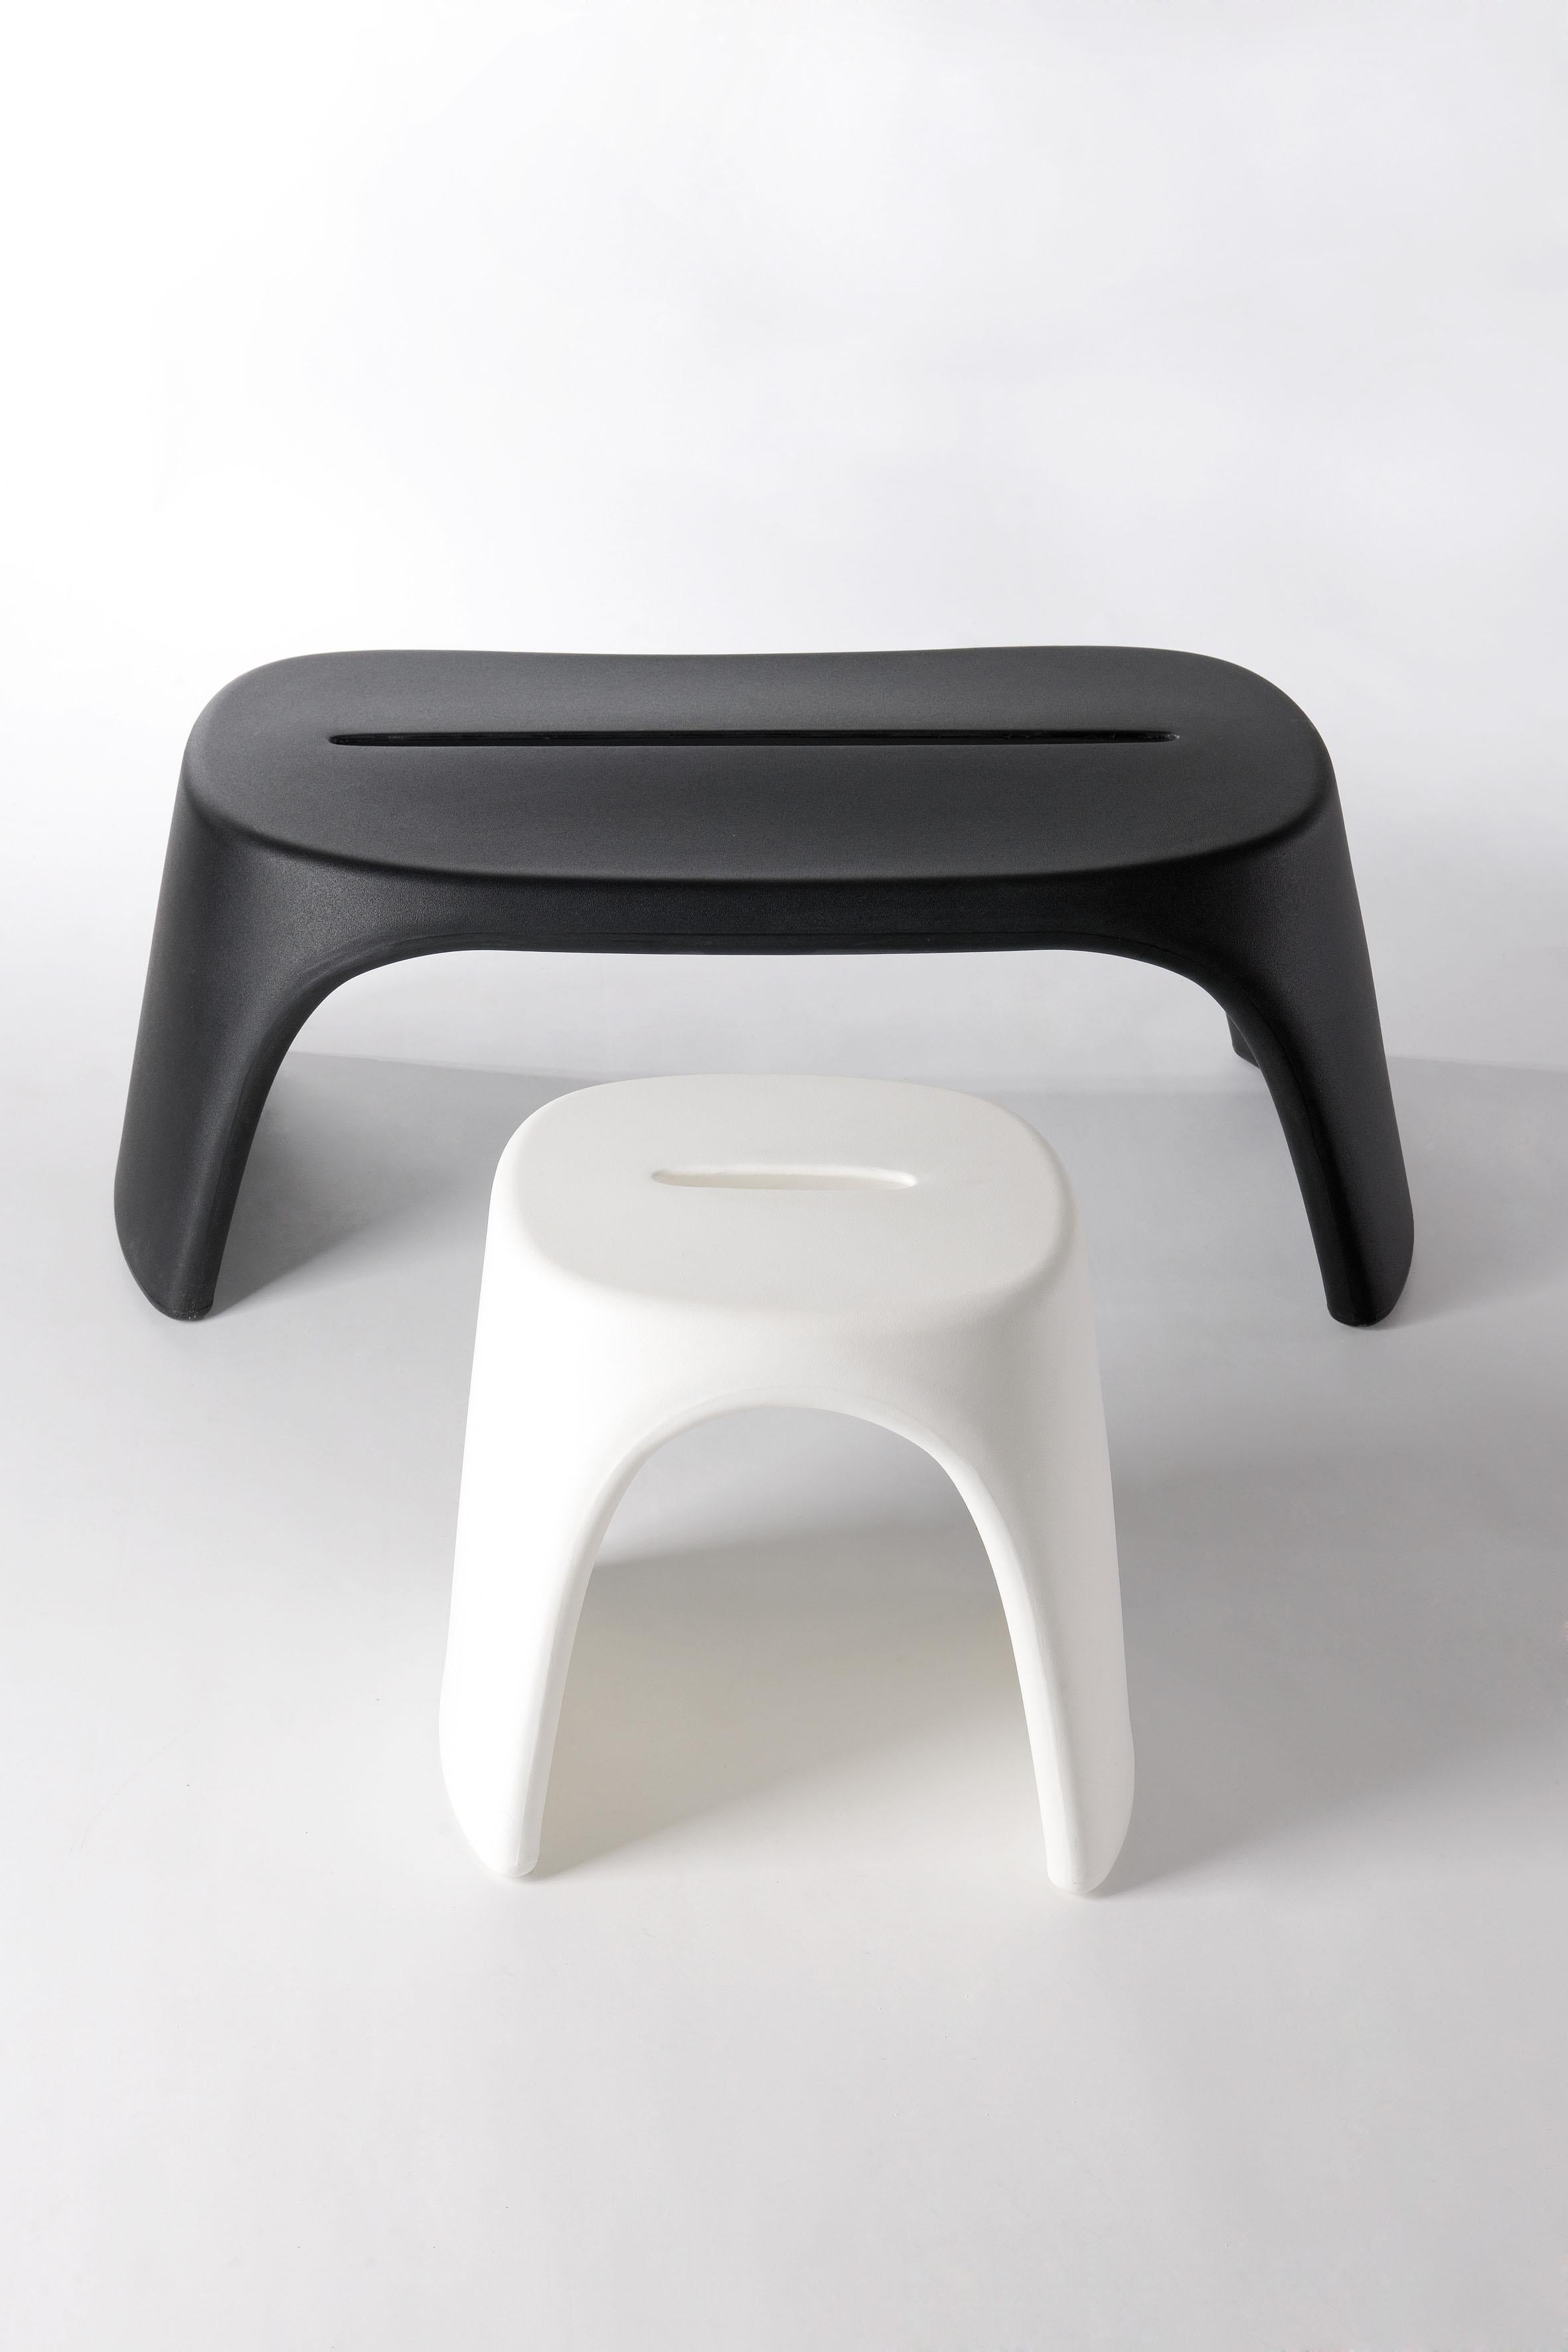 Italian Slide Design Amélie Panchetta Bench in Jet Black by Italo Pertichini For Sale